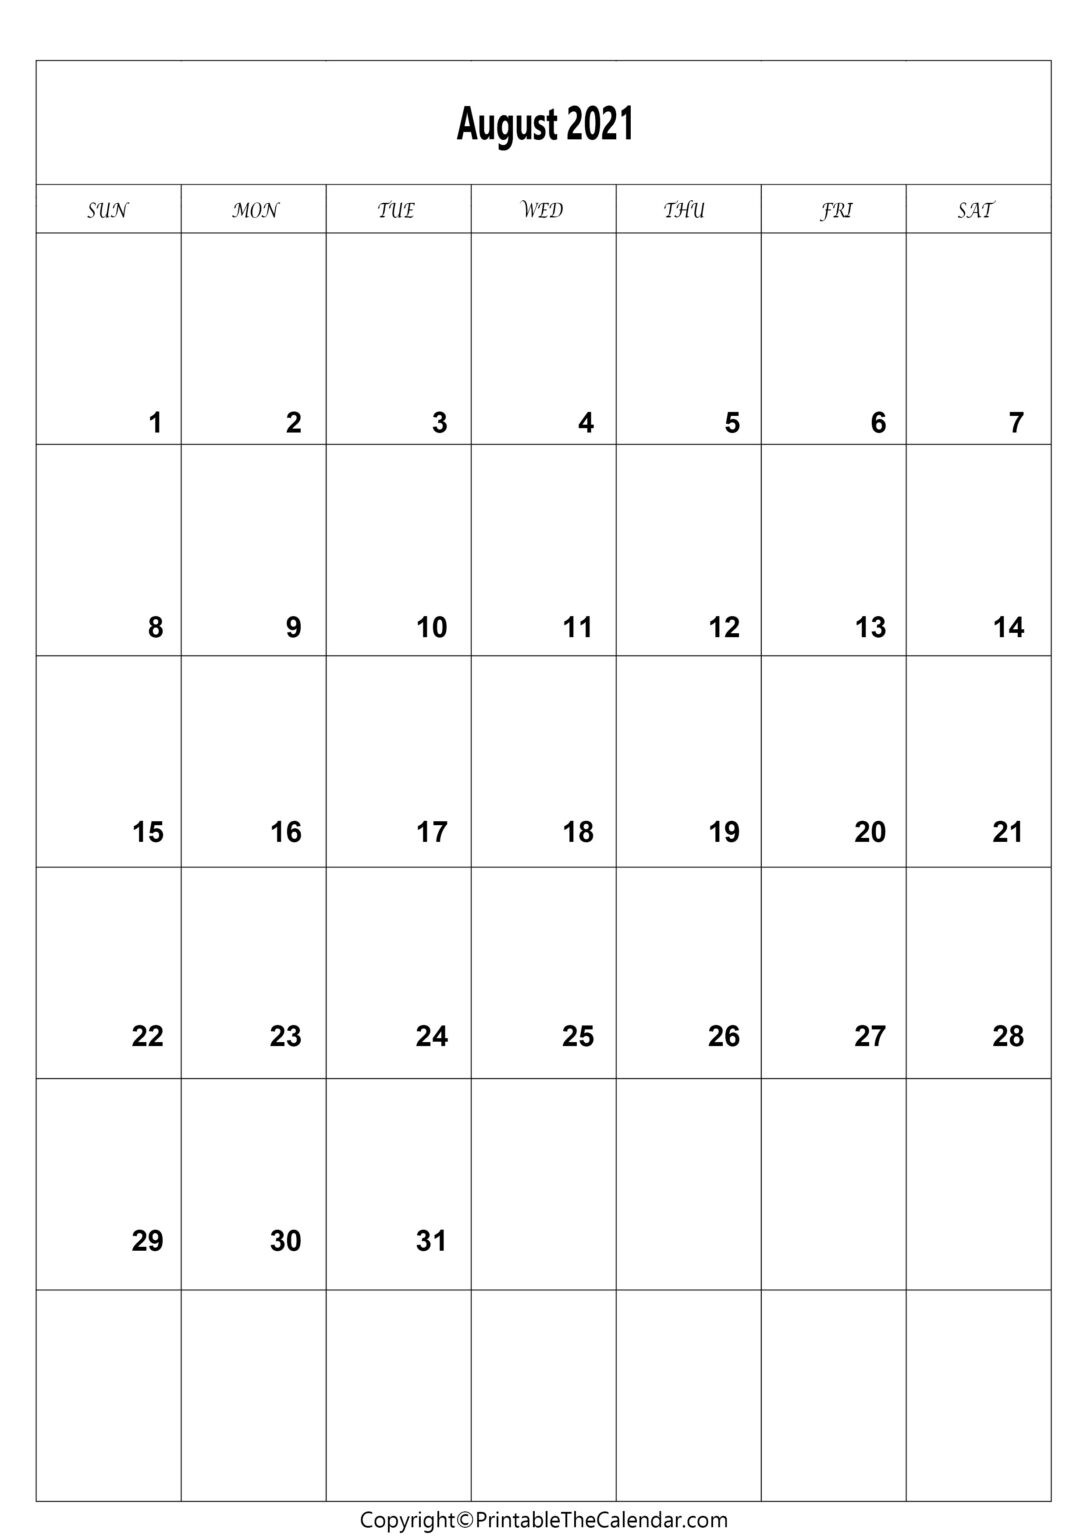 August 2021 Calendar A4 Size [Free Printable Template]-Hourly Aug 2021 Calendar